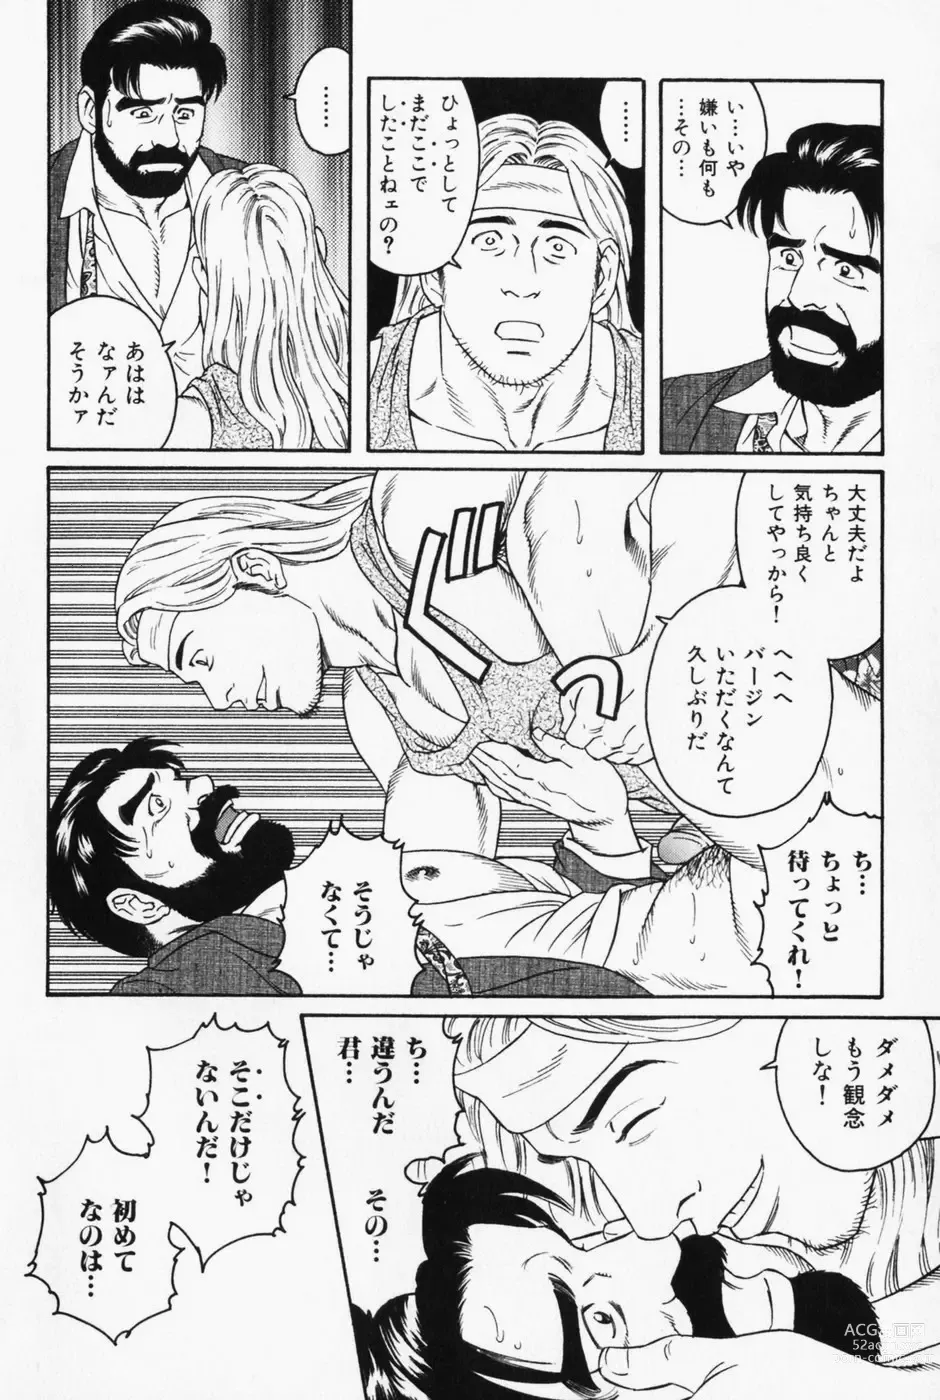 Page 10 of manga Shinkei-sei Ien